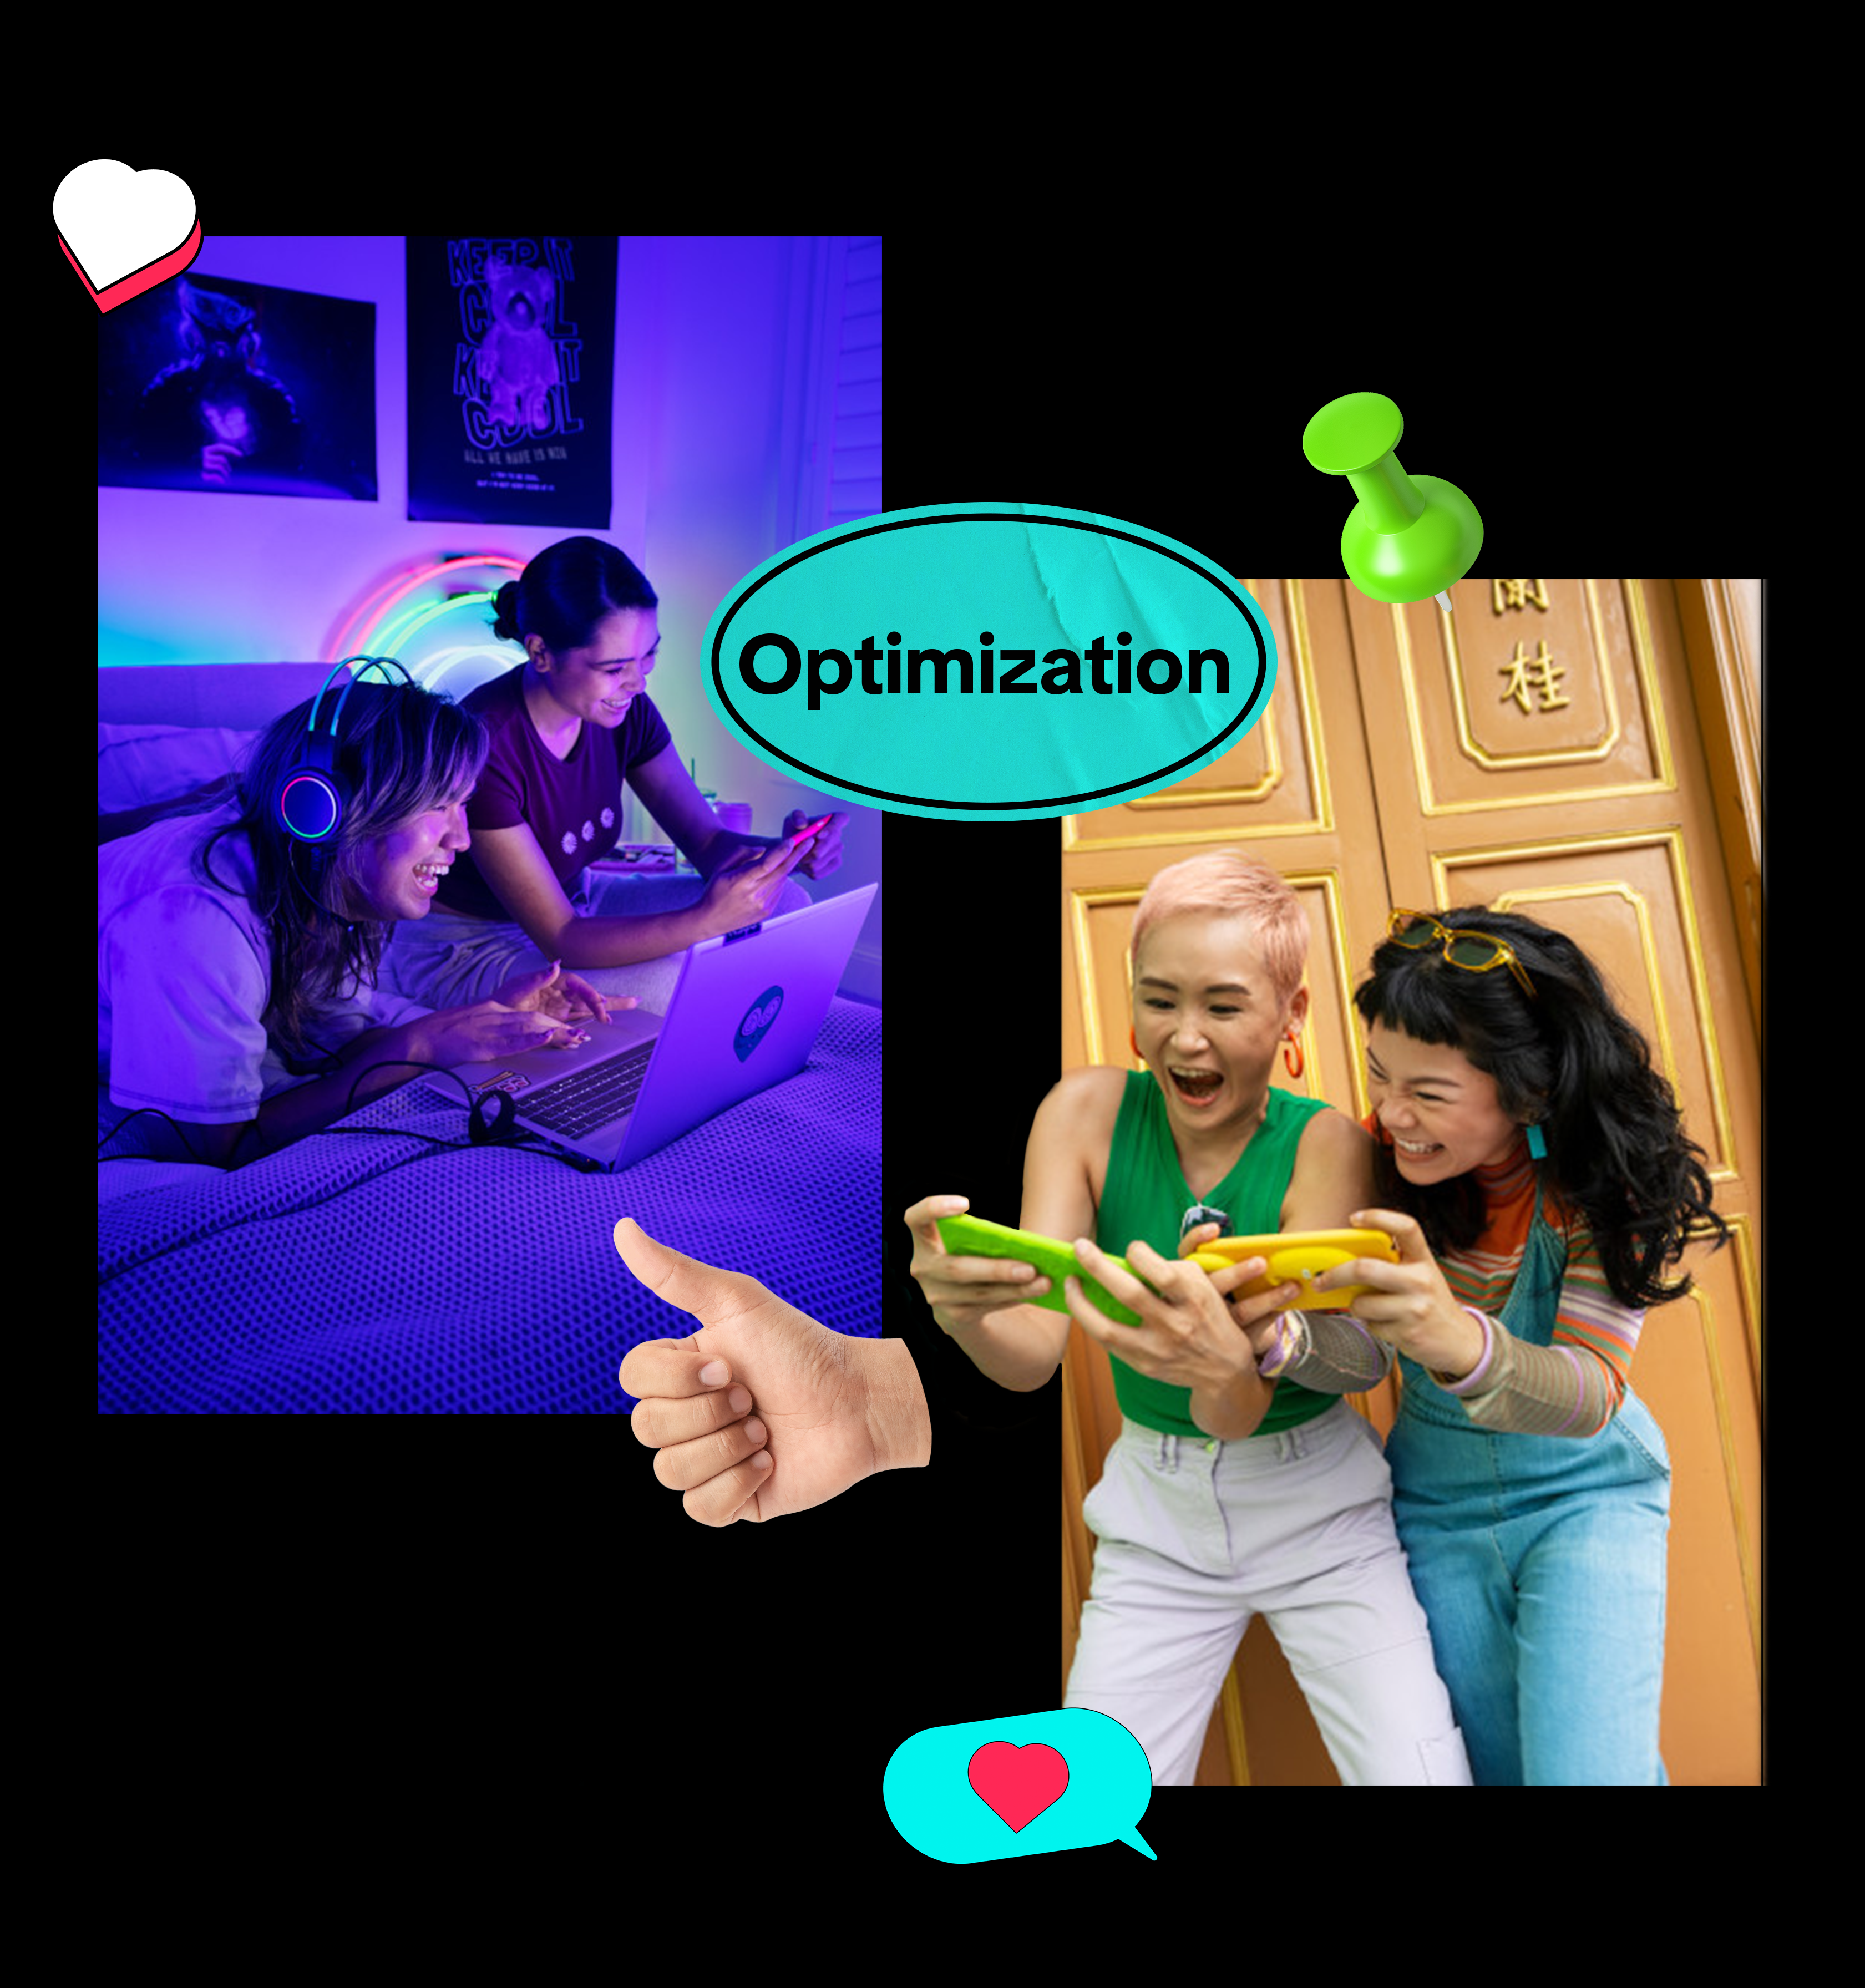 Content Optimization: Phase Three of the TikTok Creative Journey